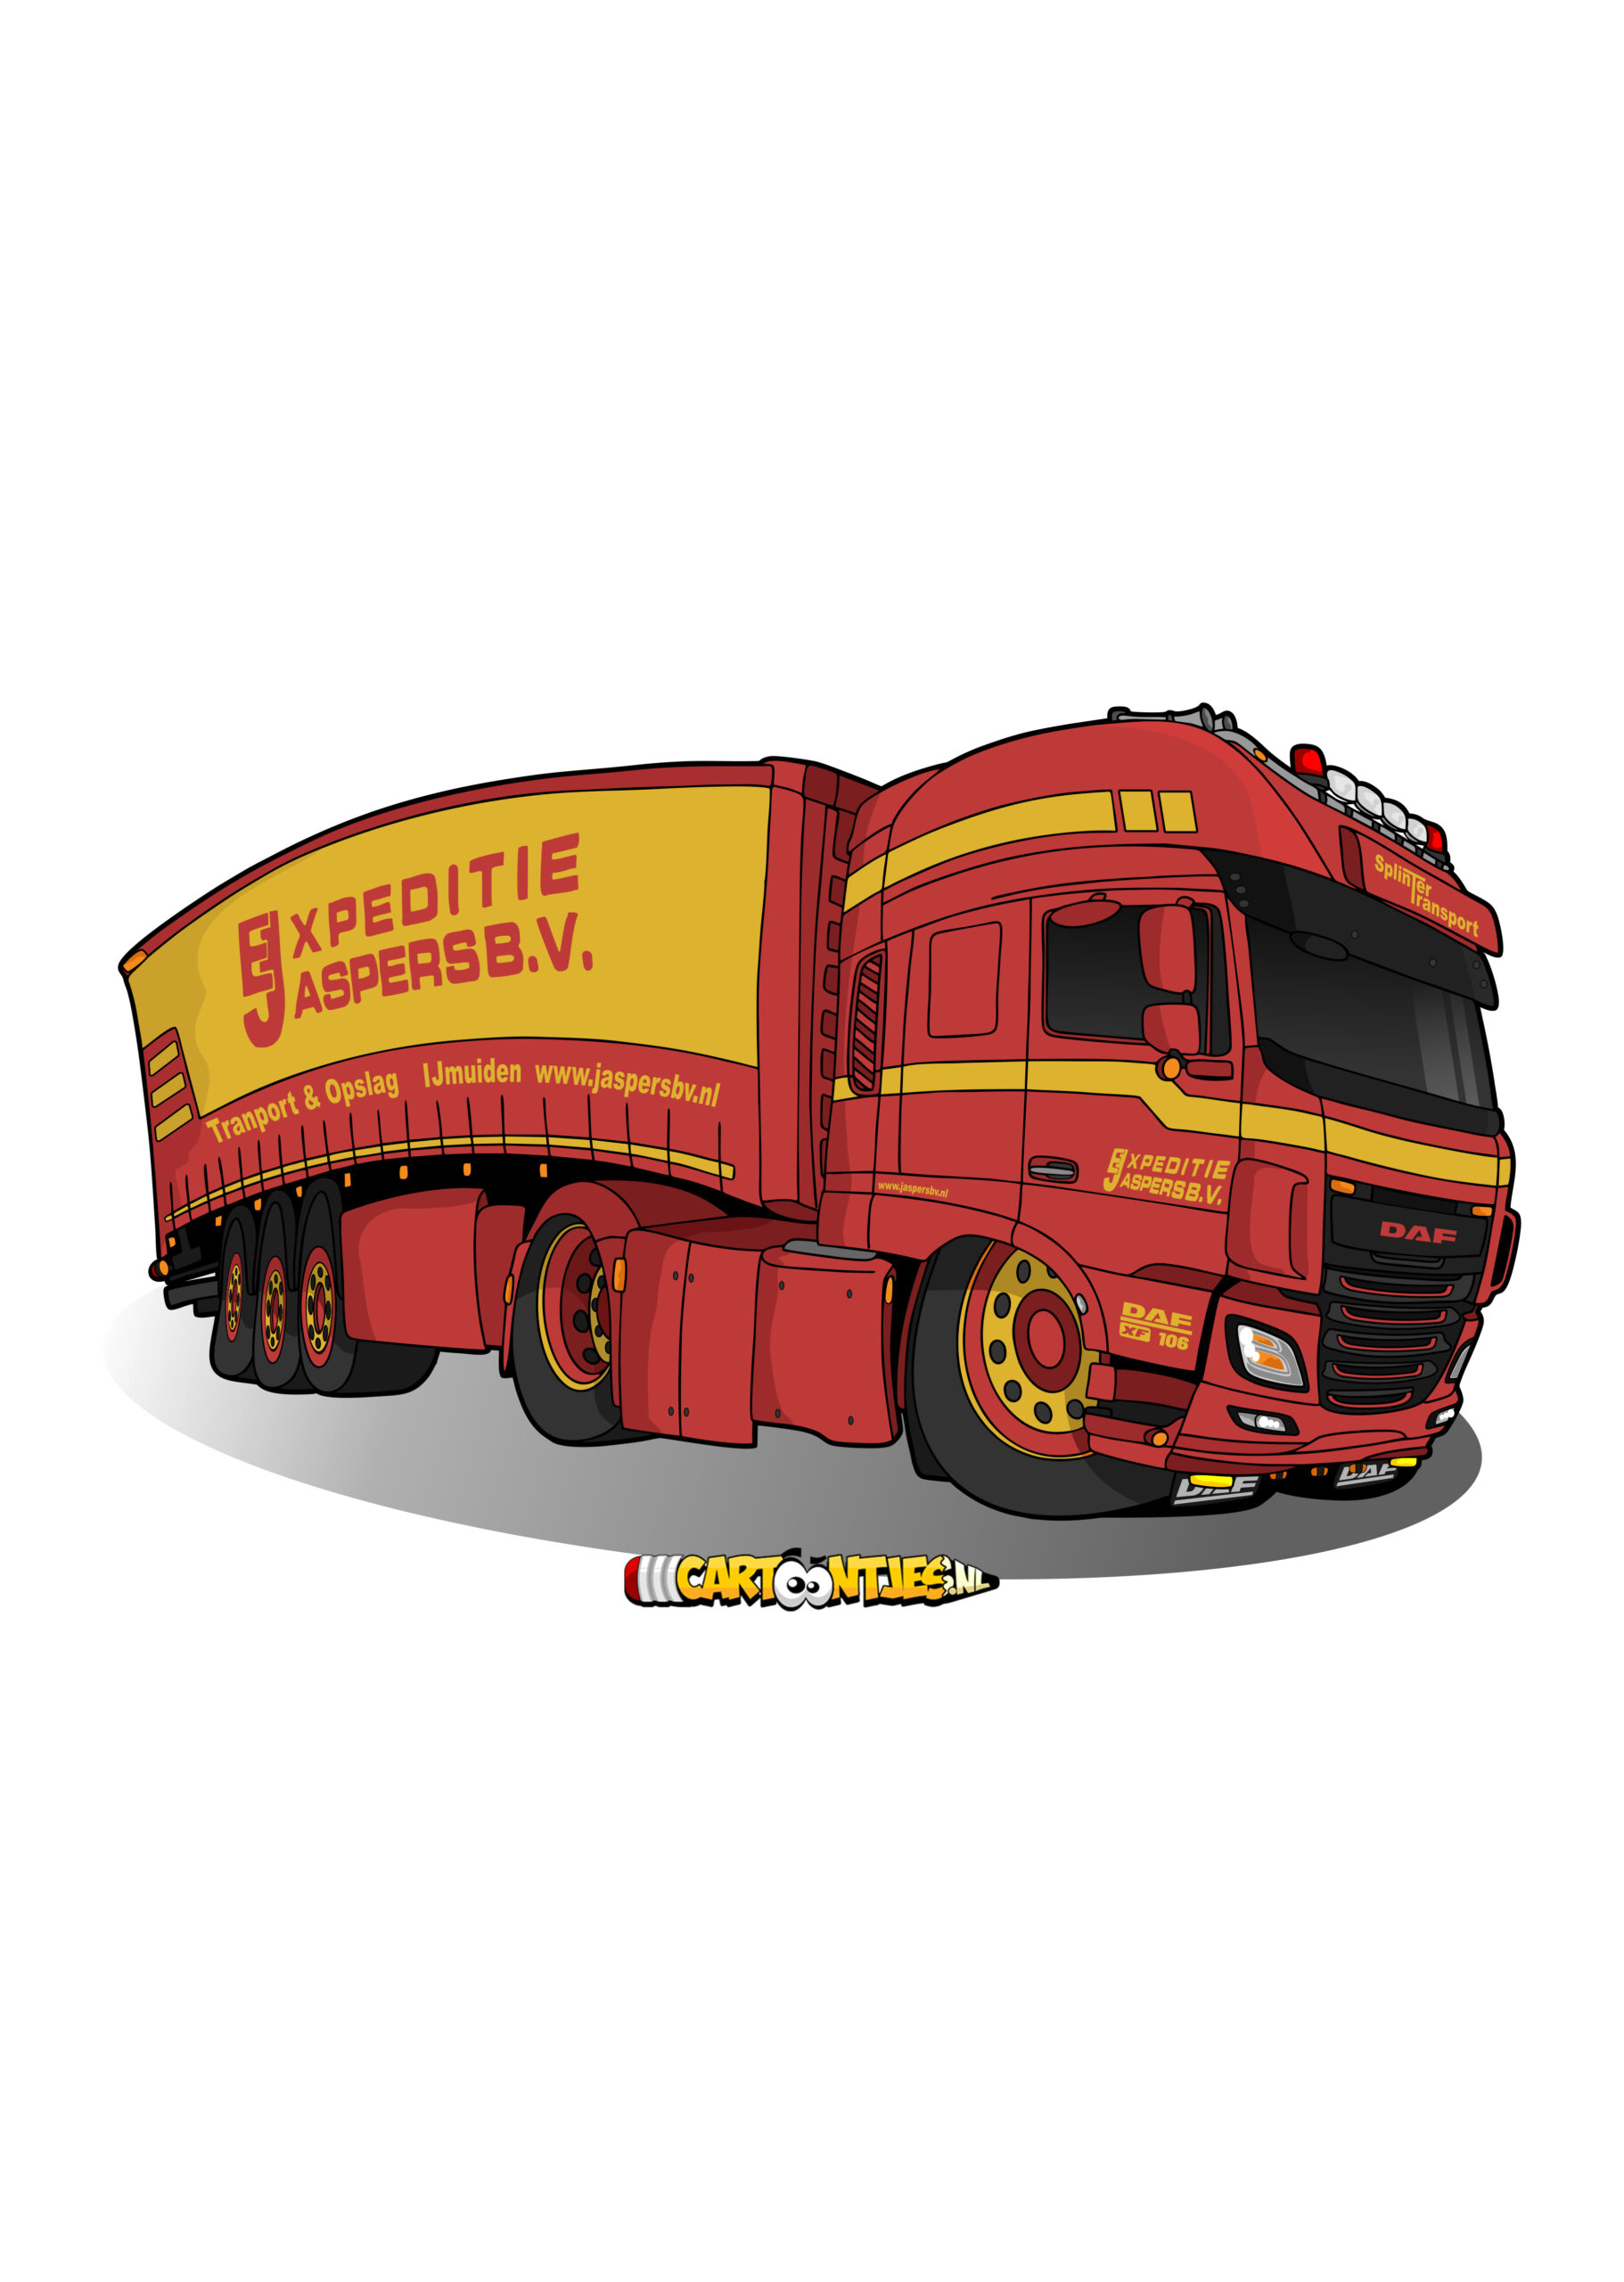 truck-cartoon-expedite jaspers bv